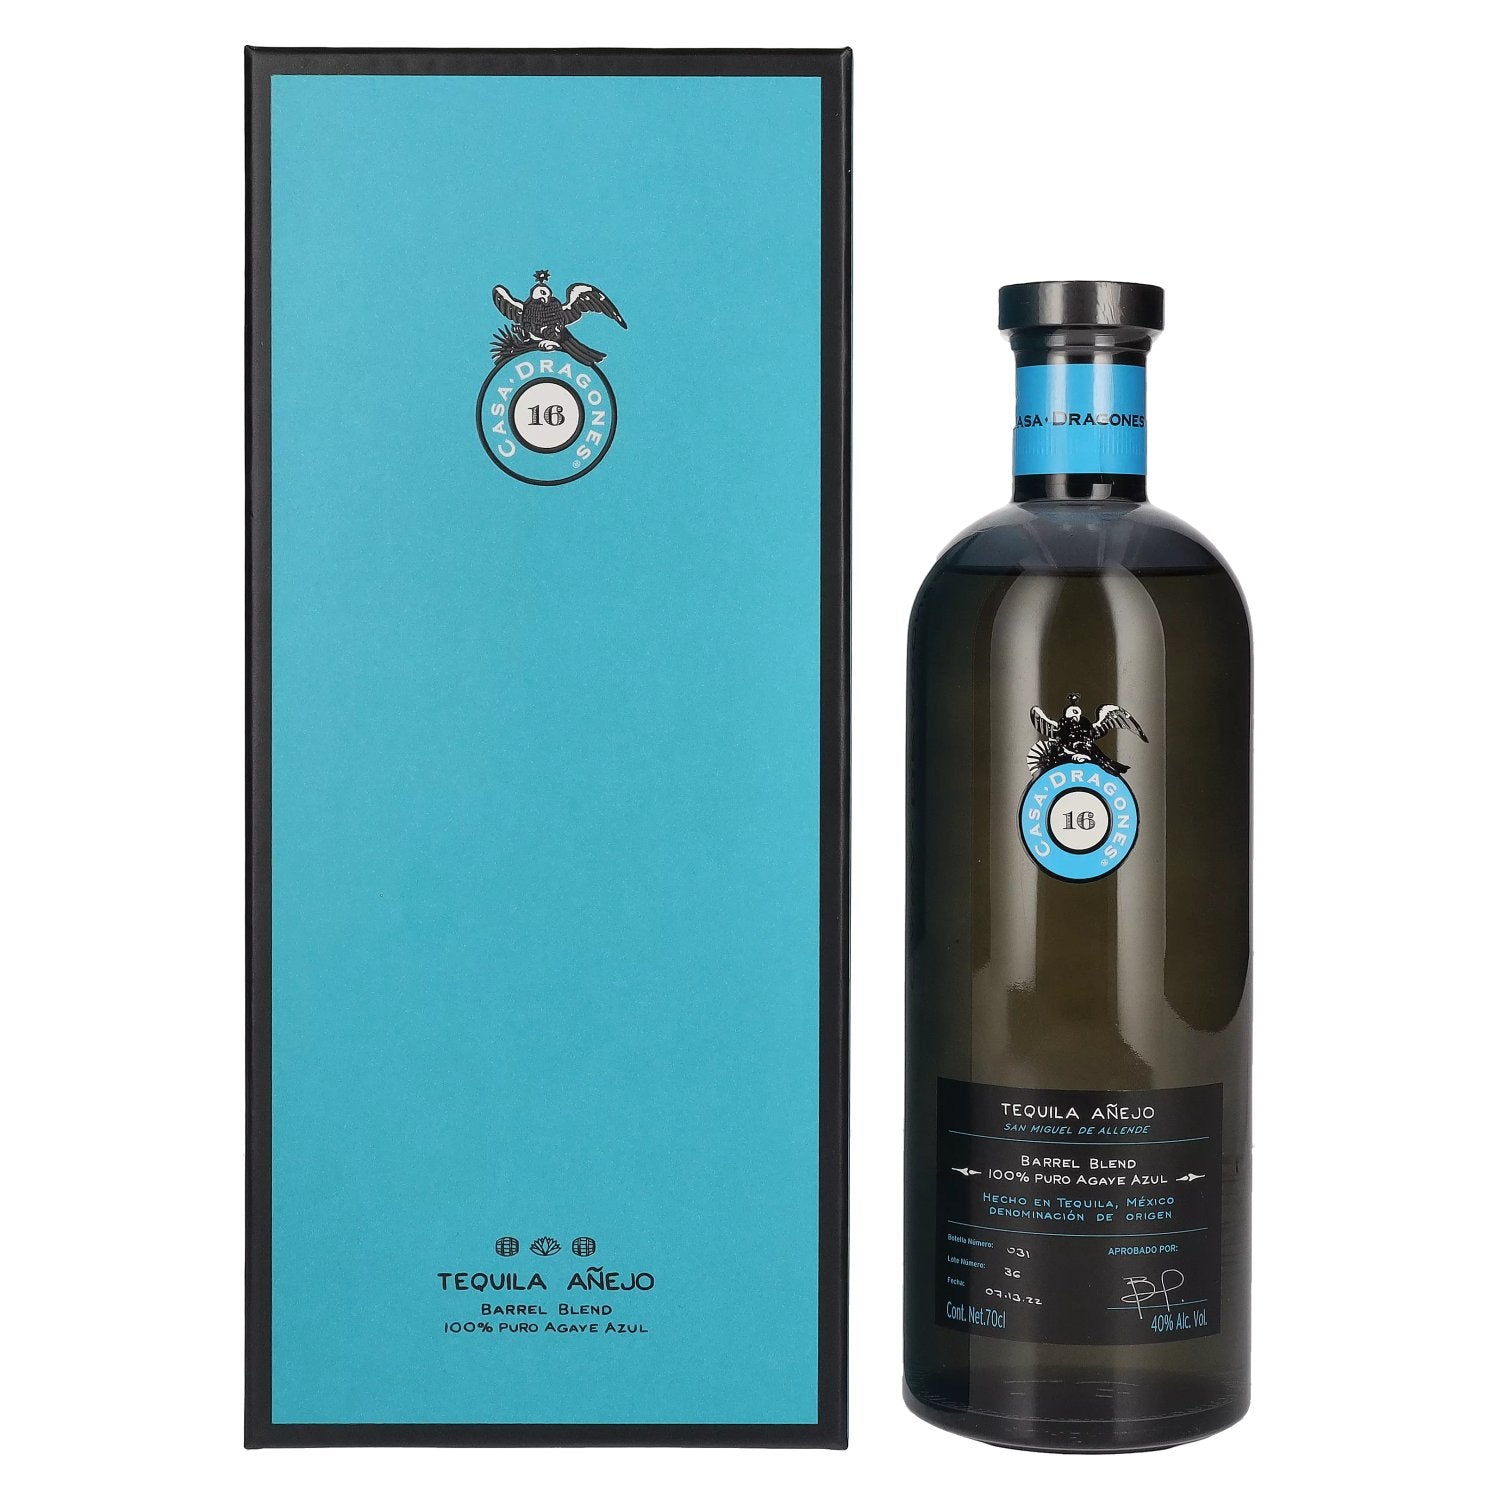 Casa Dragones Tequila ANEJO Barrel Blend 100% Puro Agave Azul 40% Vol. 0,7l in Giftbox